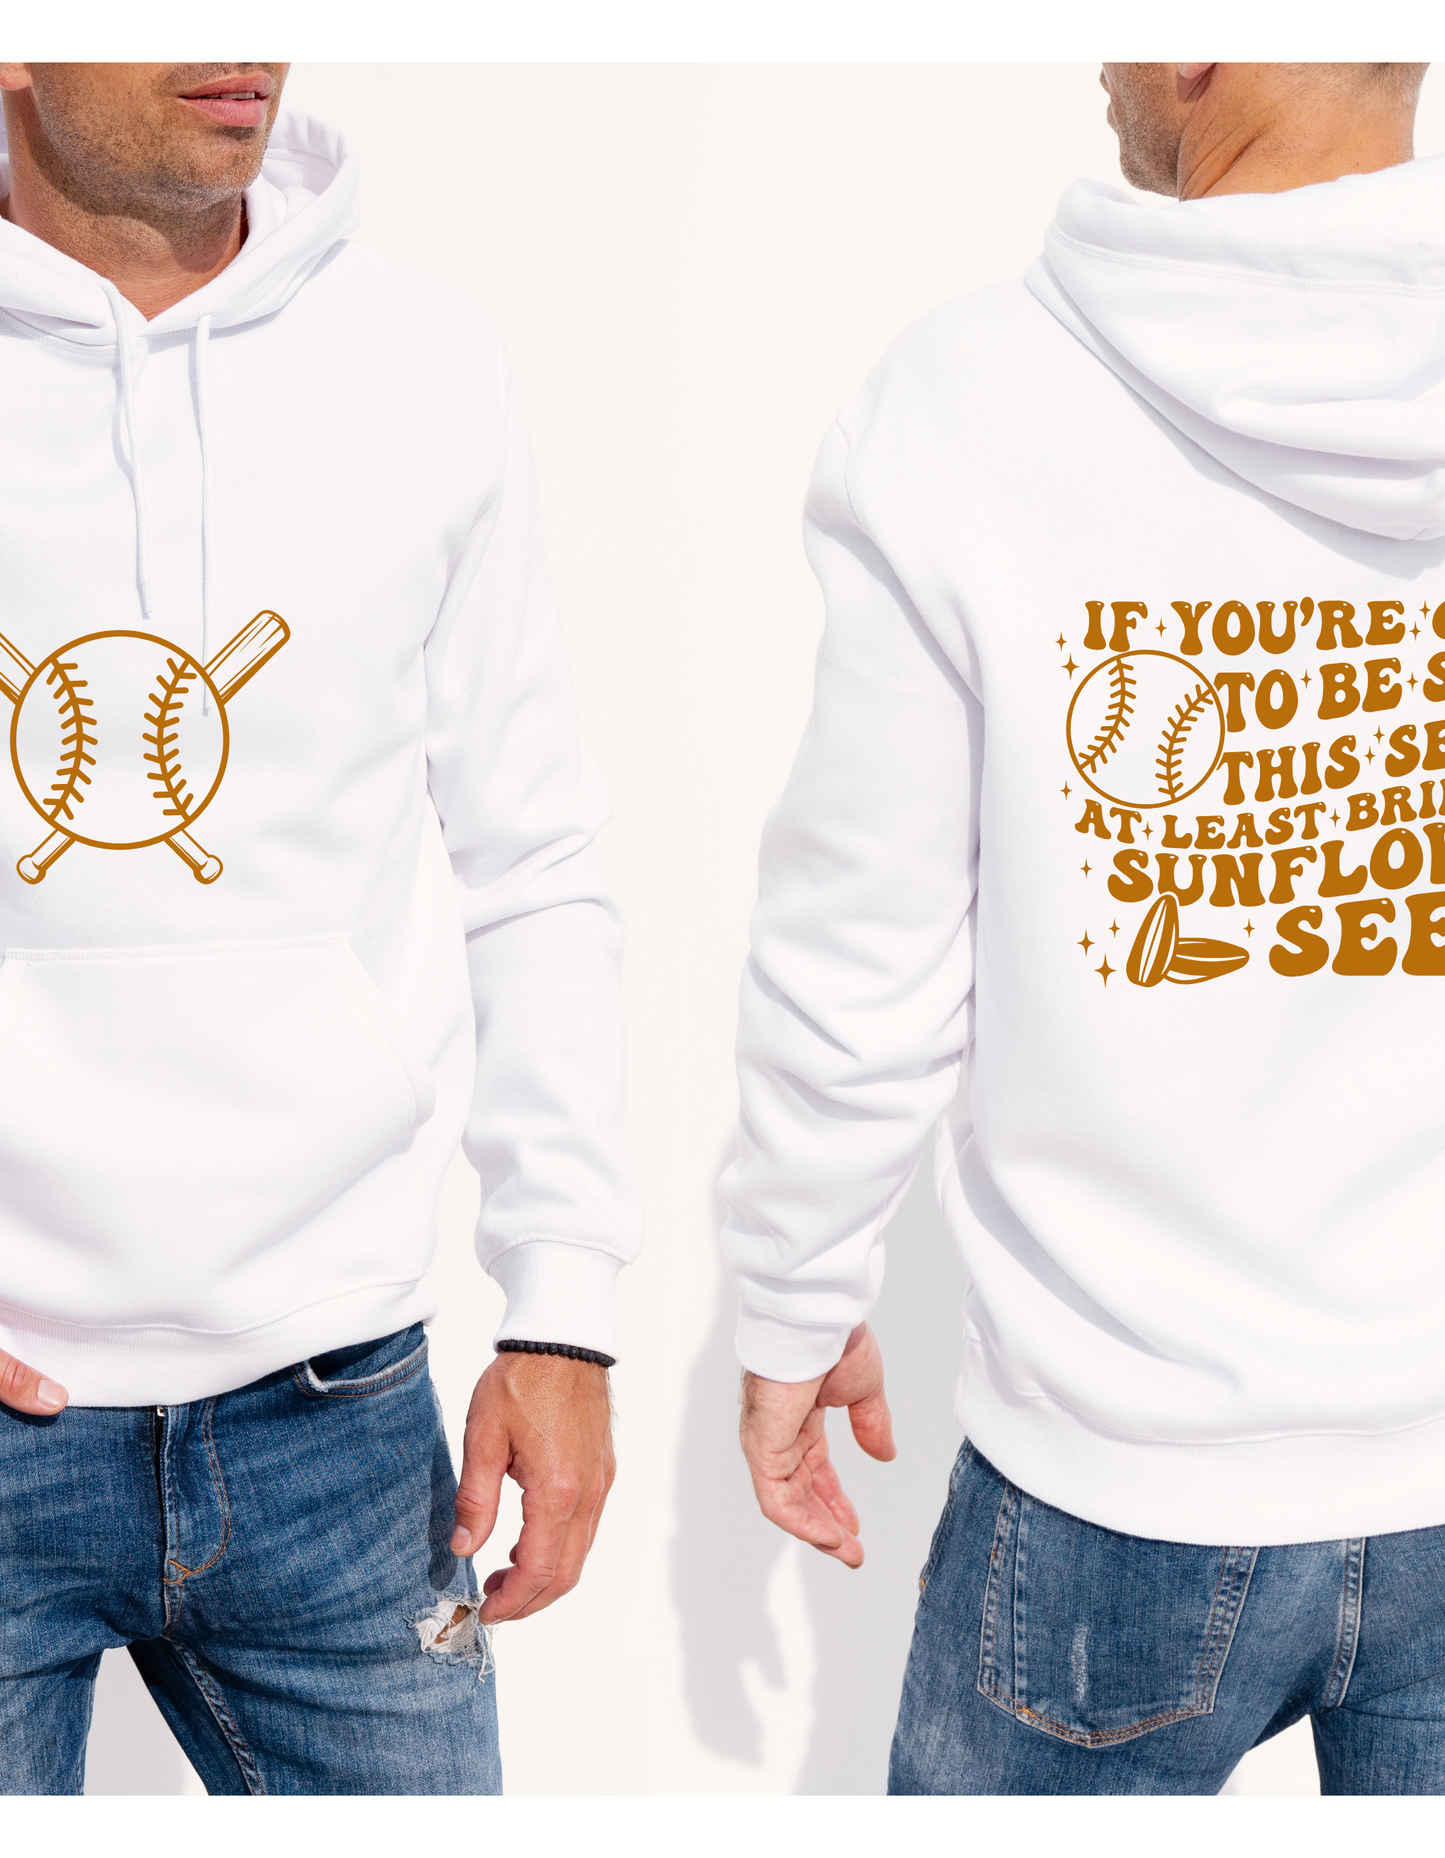 If You're Going To Be Salty Bring Sunflower Seeds Baseball Sweatshirt, Baseball Unisex Crewneck Sweater